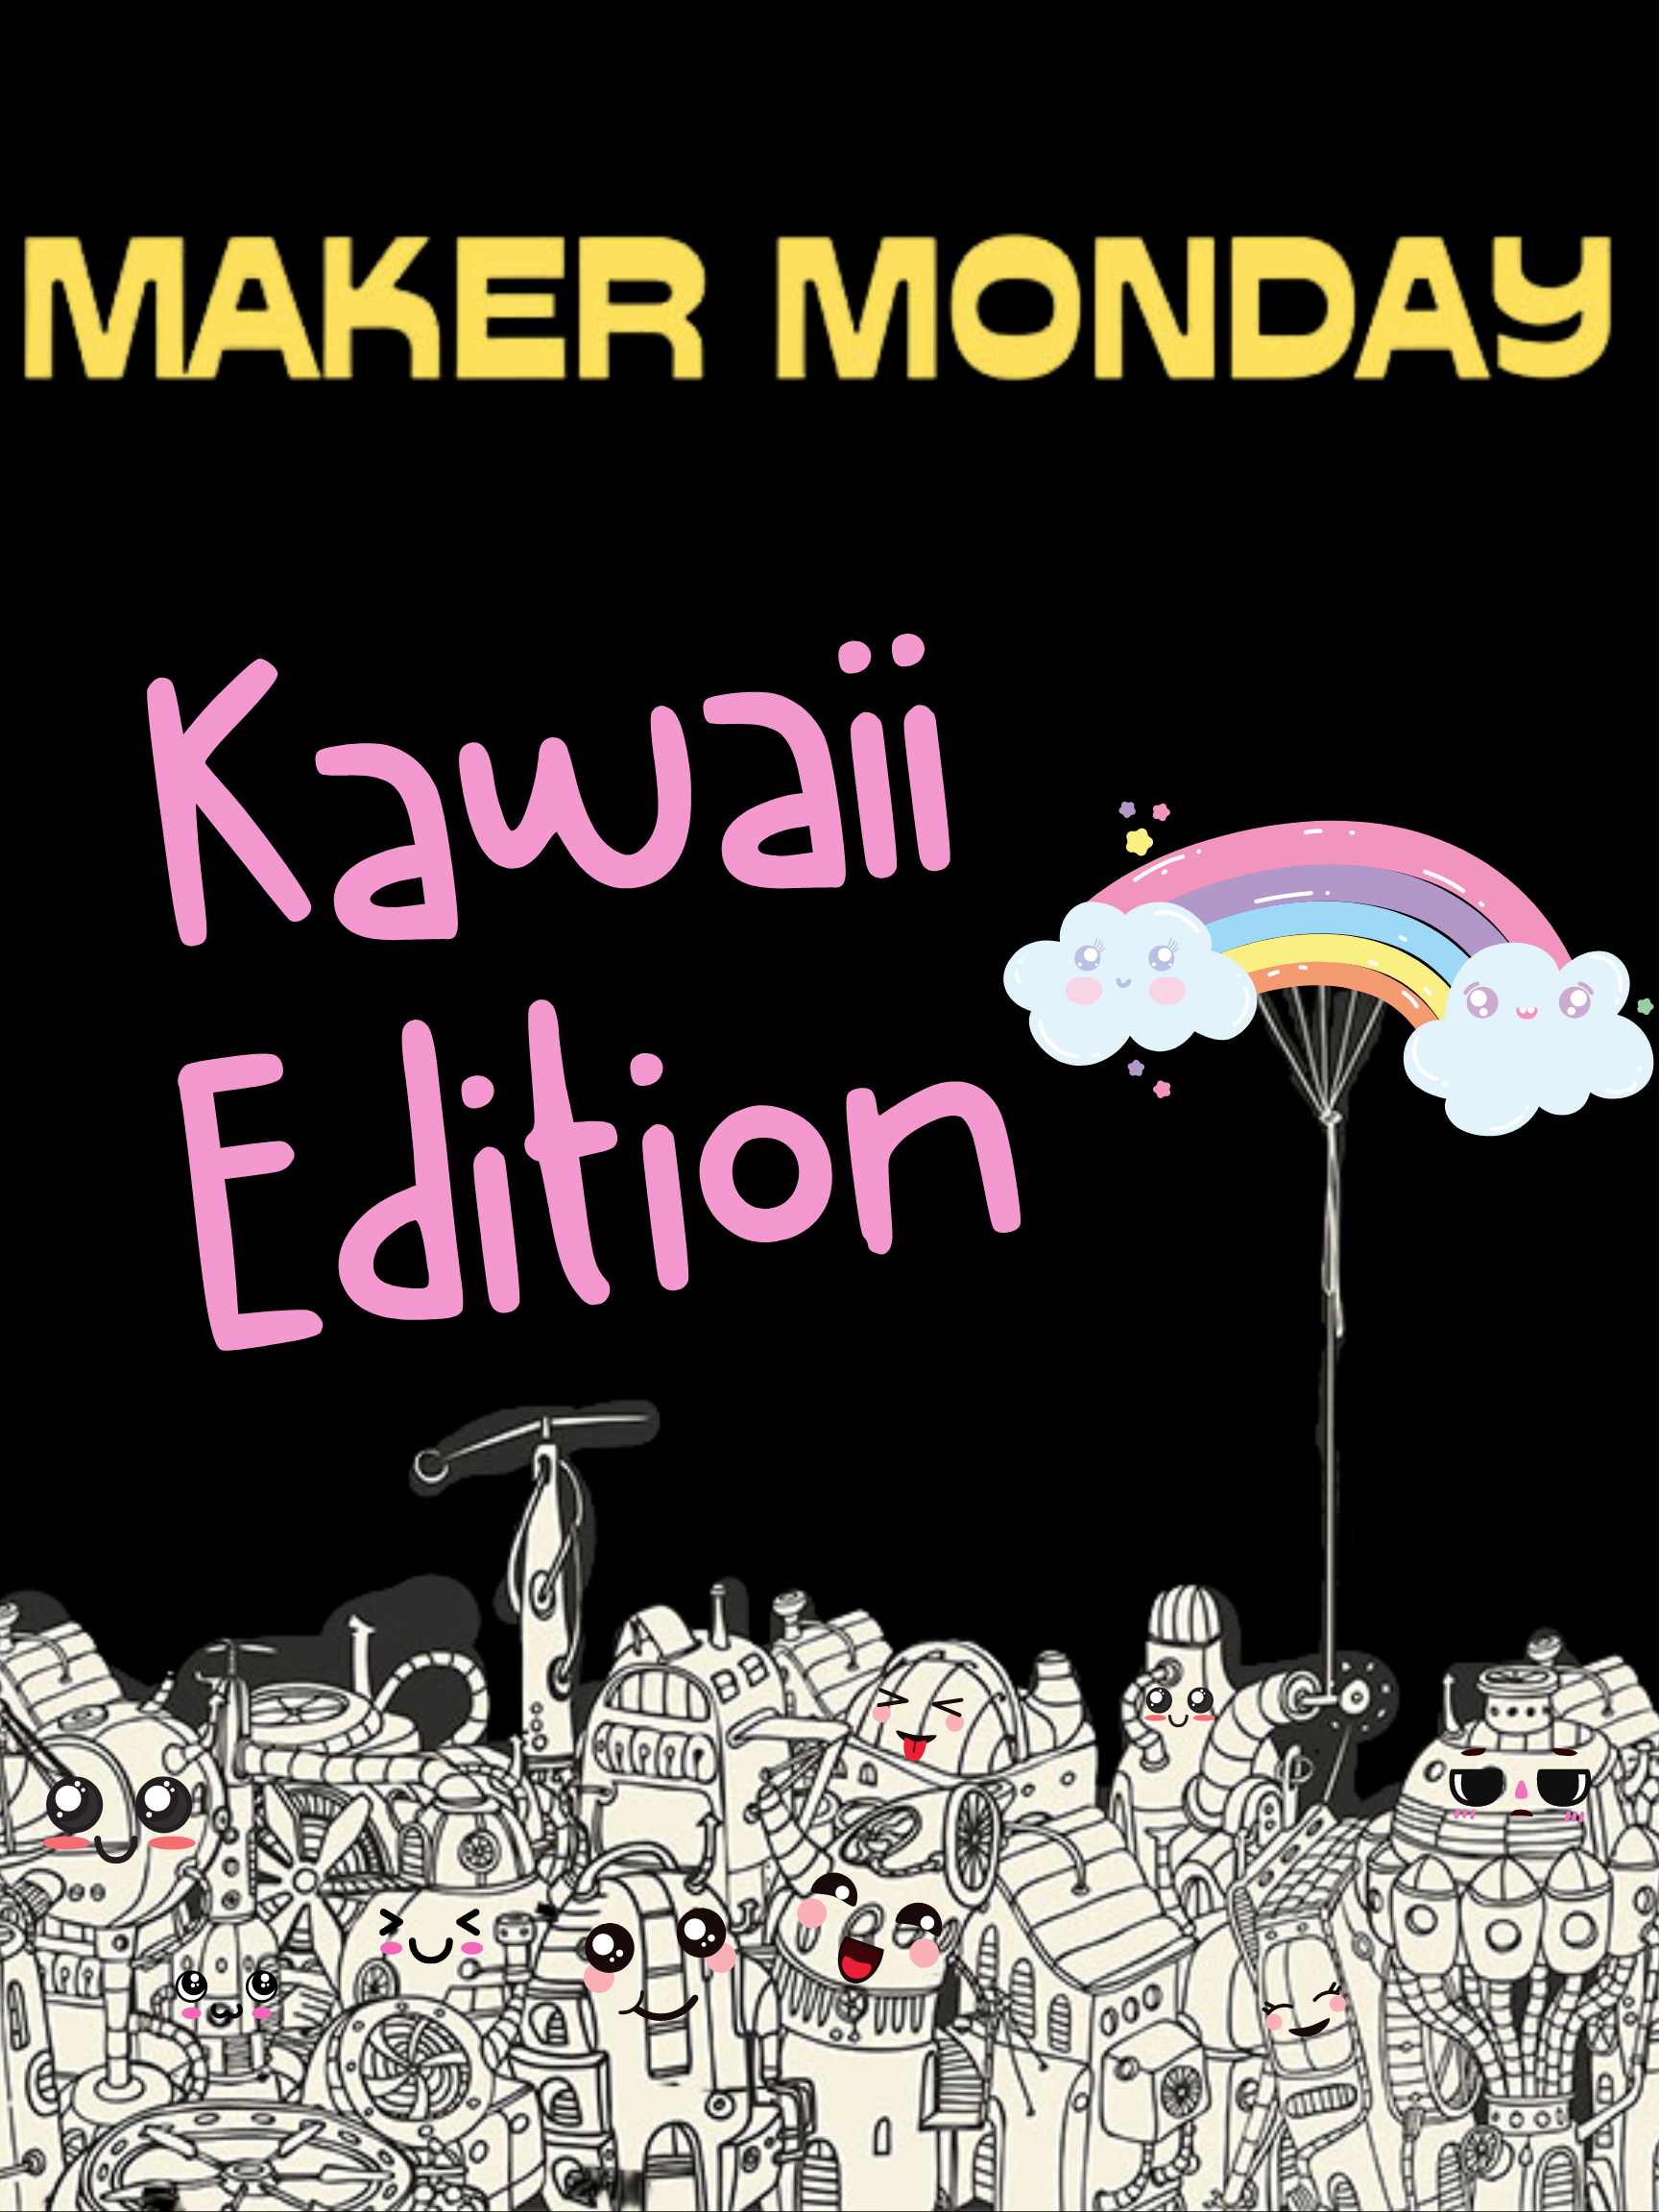 Kawaii edition of Maker Monday poster.